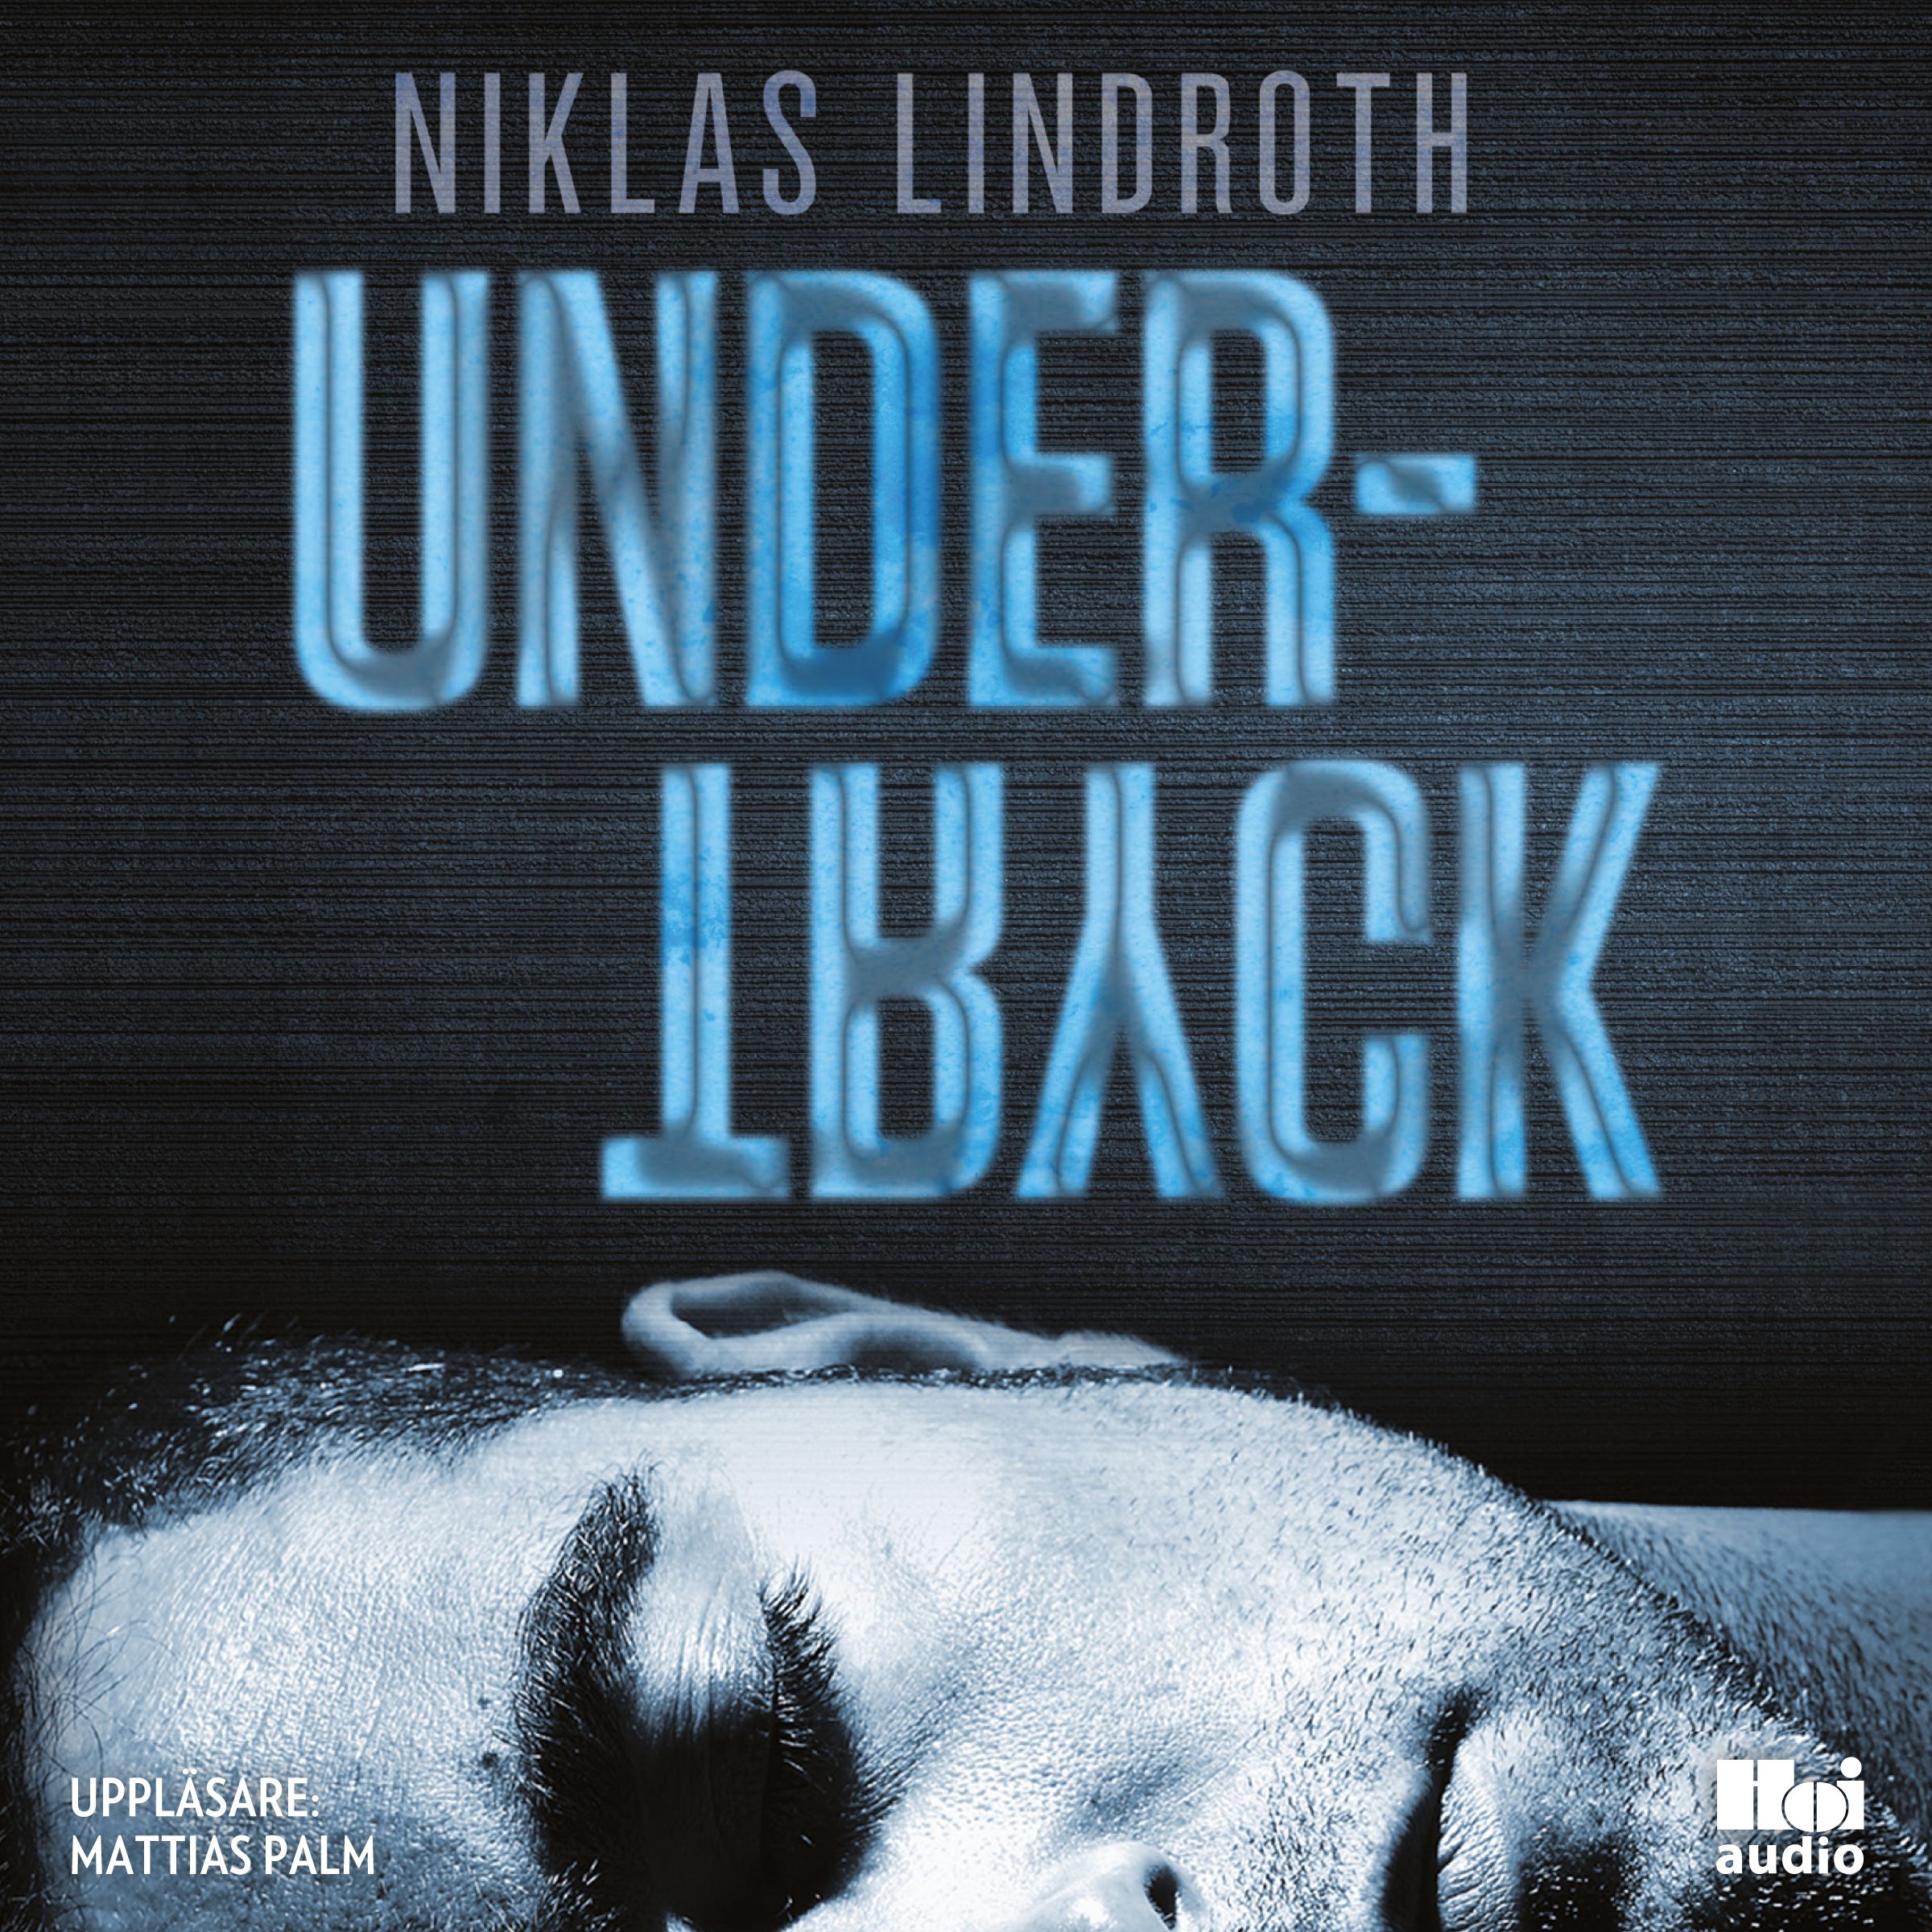 Undertryck, audiobook by Niklas Lindroth